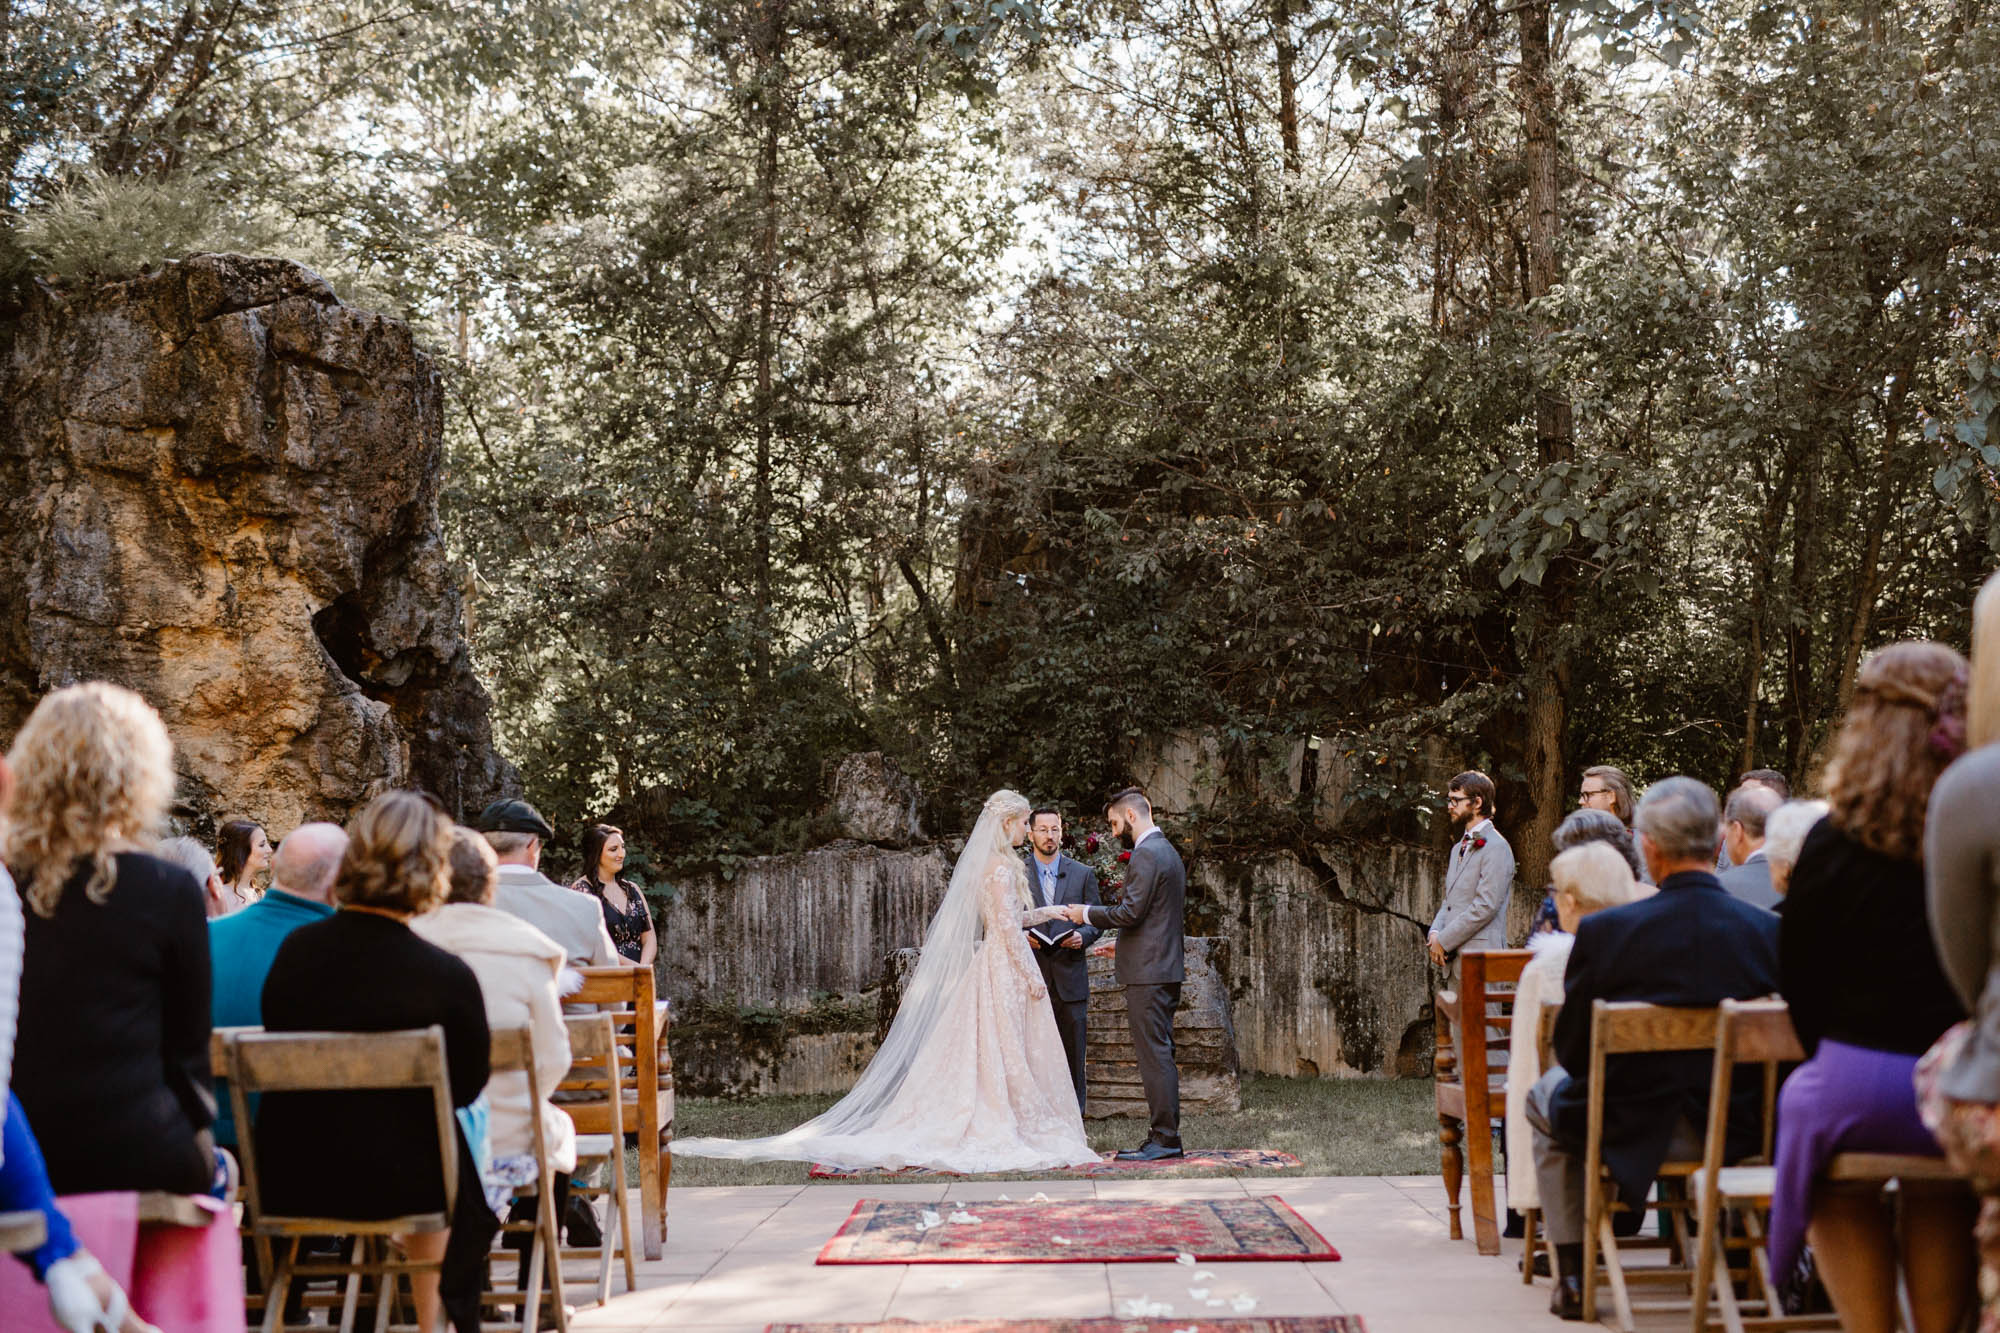 10 Ways to Make Your Wedding Eco-Friendly